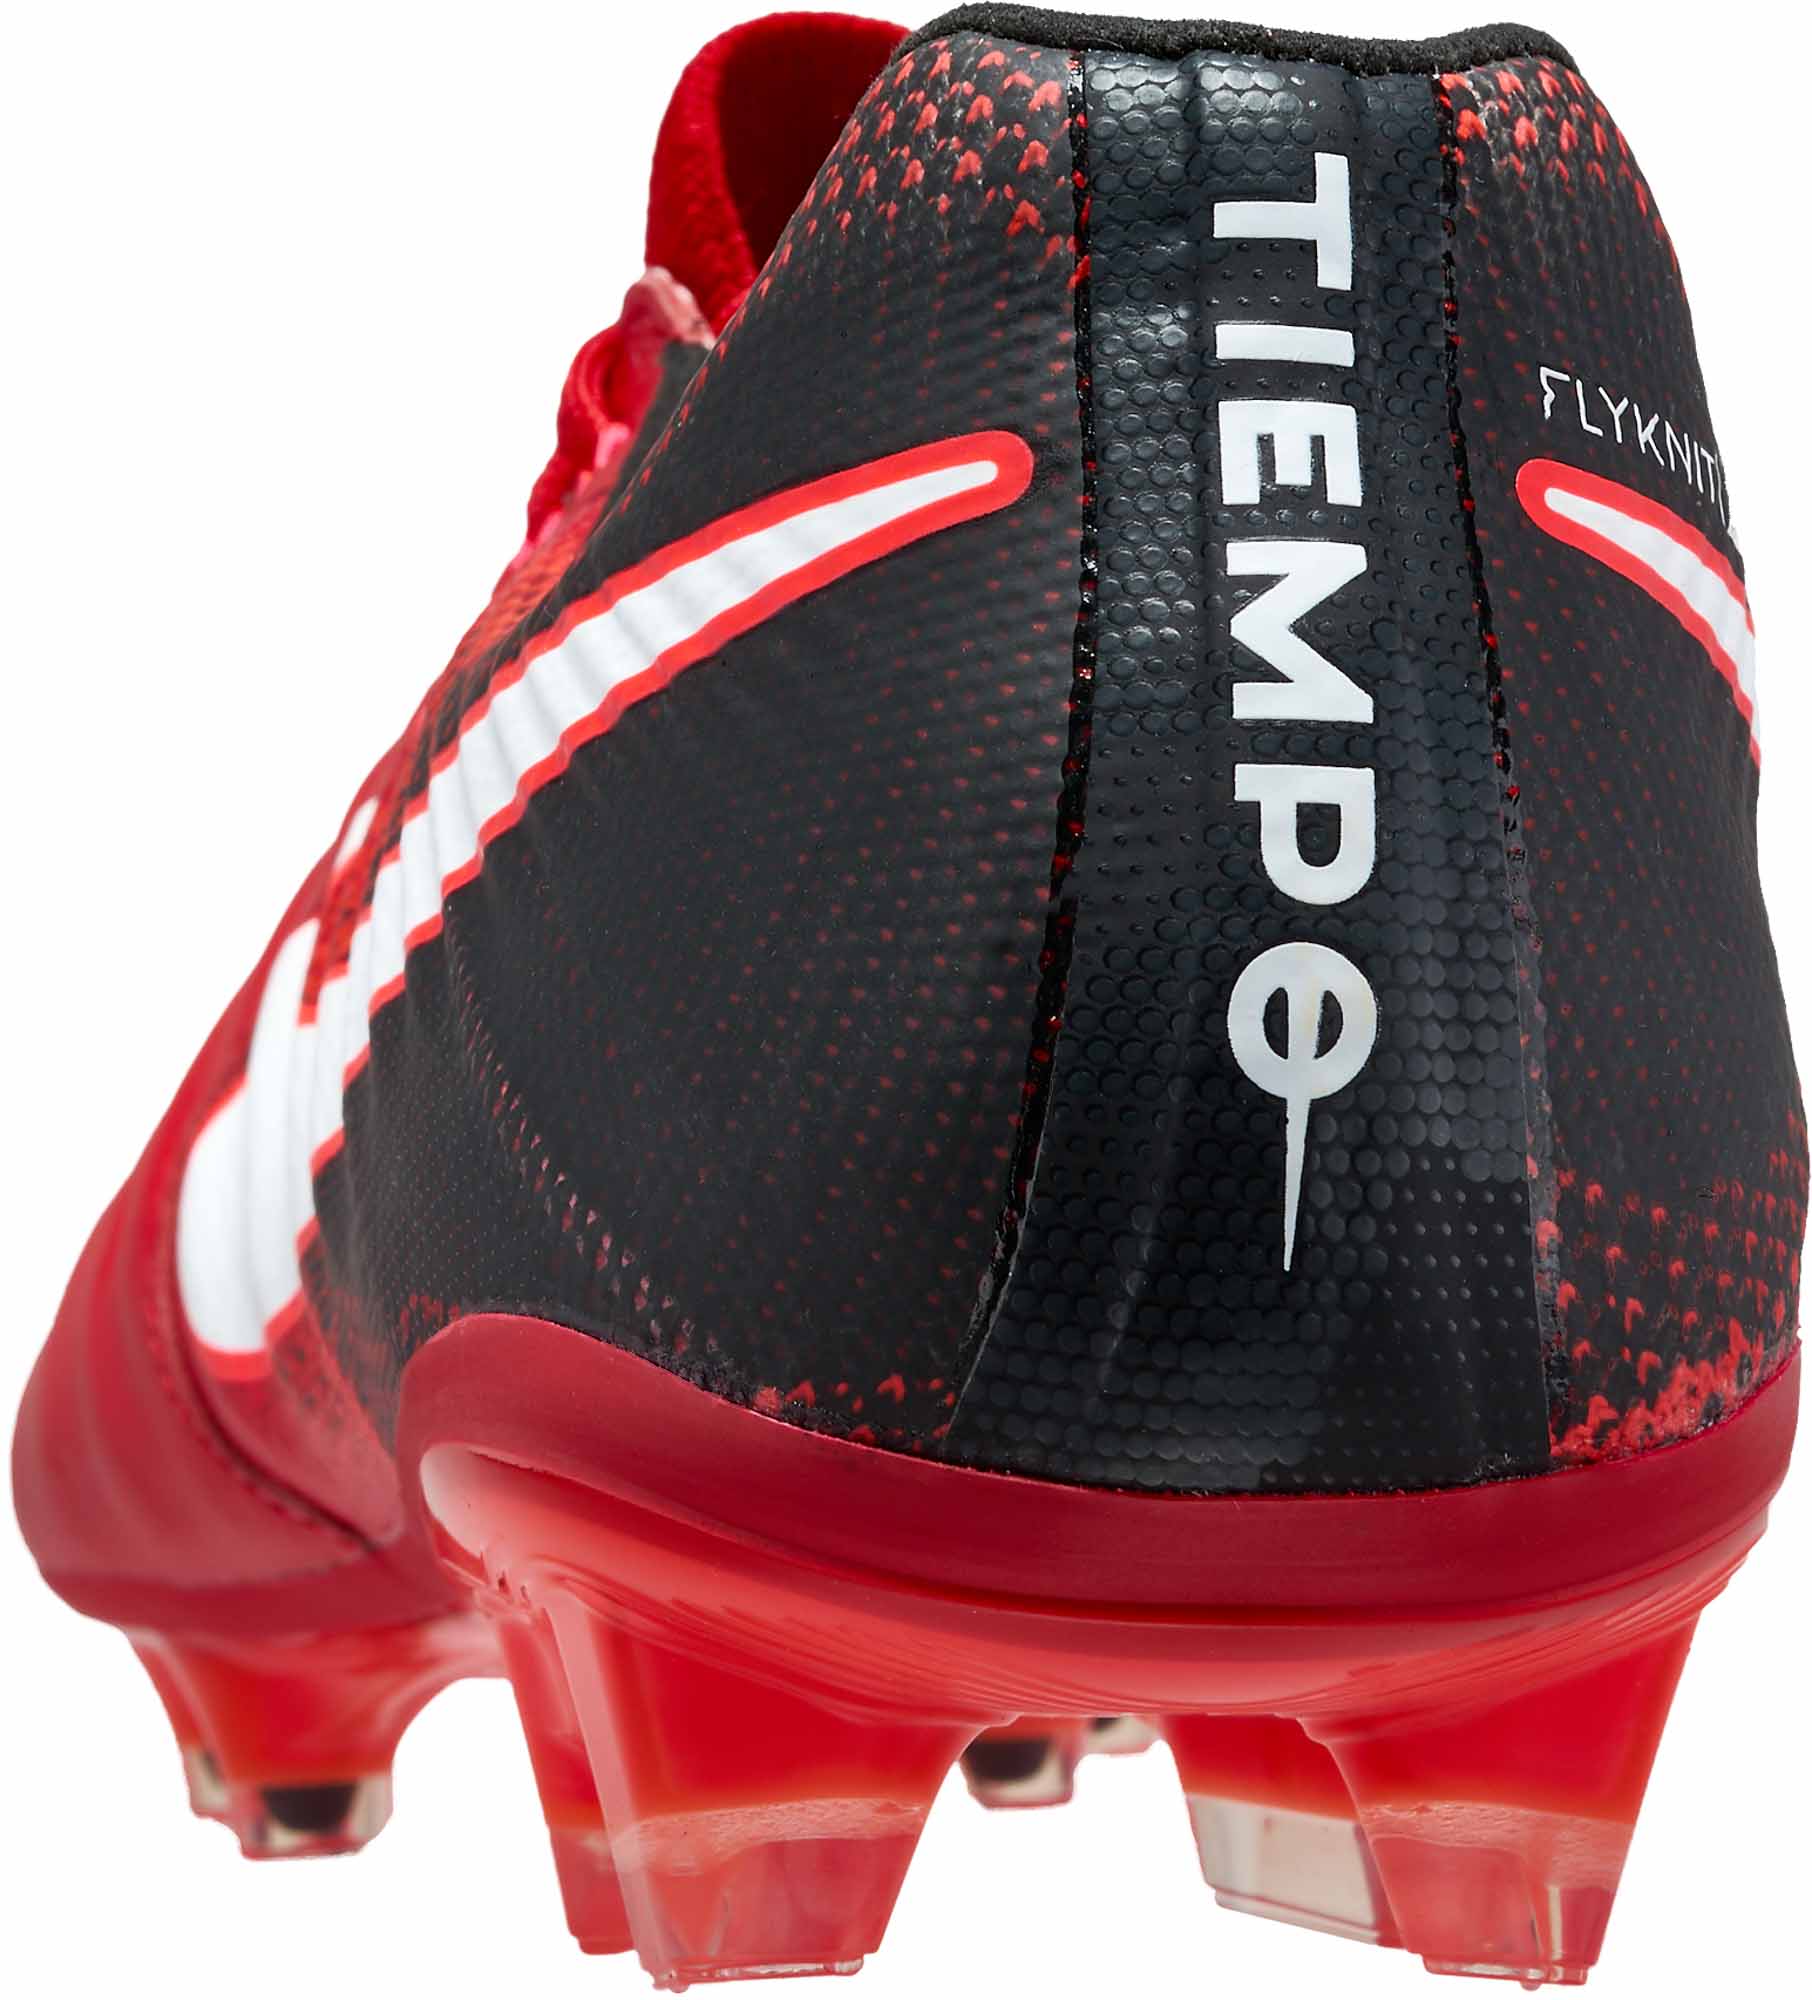 Nike Tiempo Legend VII FG - University Red & White - Soccer